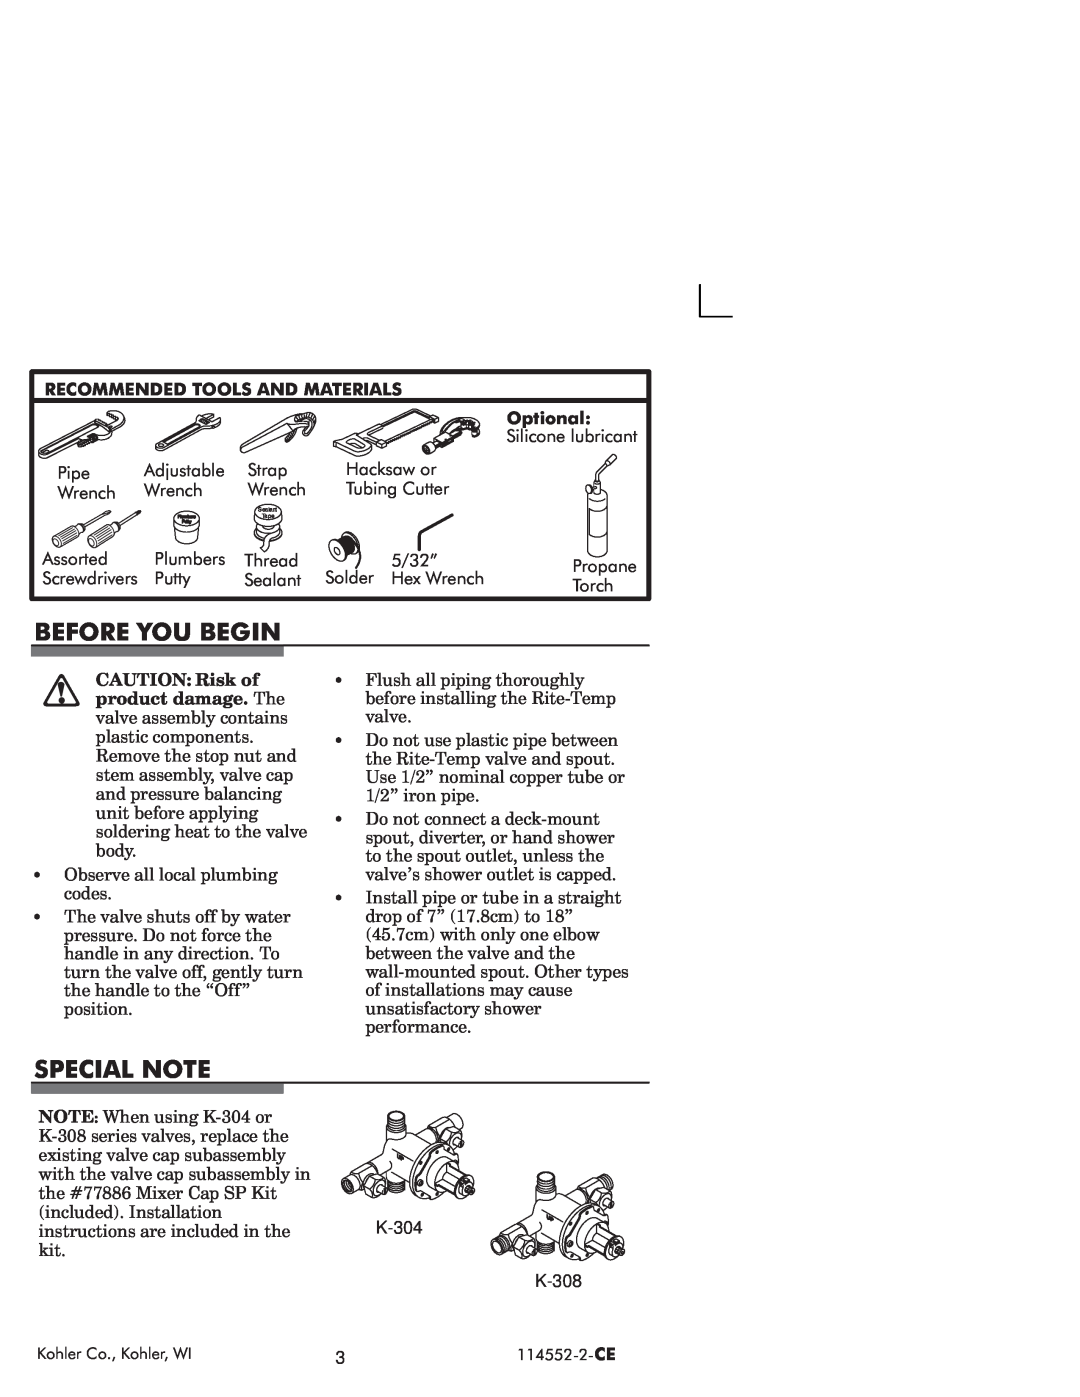 Kohler 114522-2-CE manual Before, Begin, Special Note 